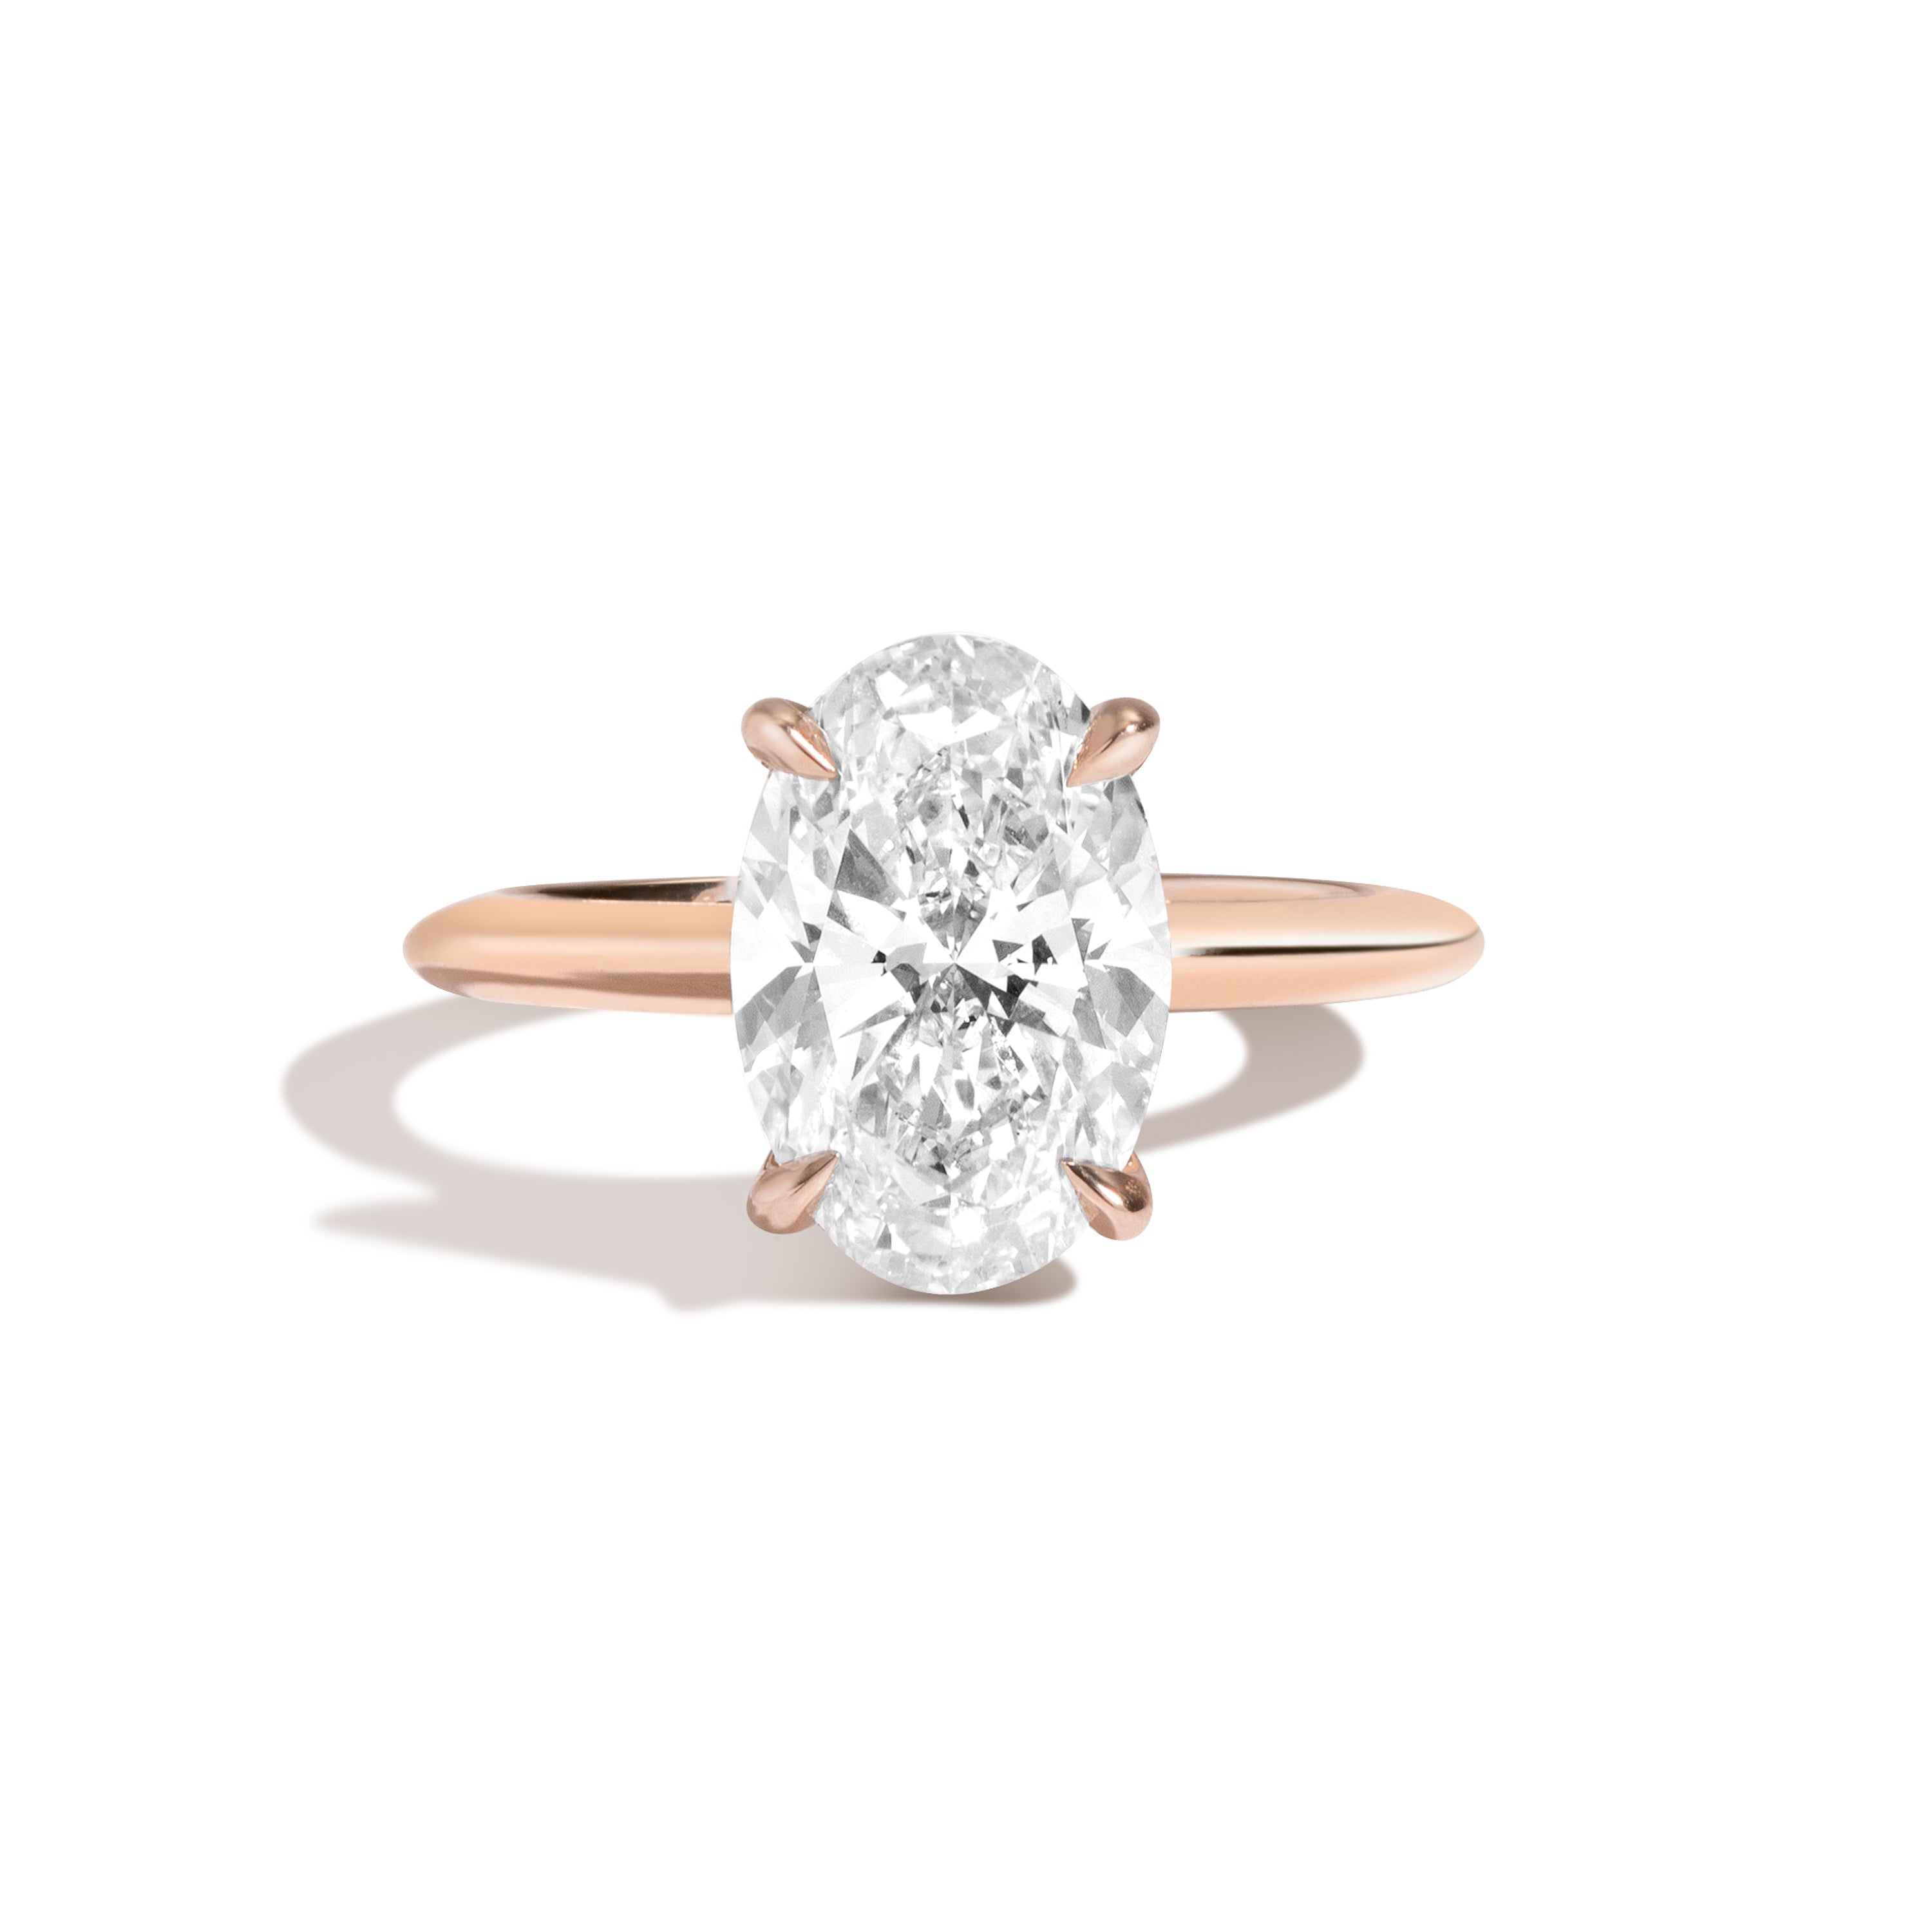 Shahla Karimi Shahla's Signature Railless Oval Engagement Ring 14K Rose Gold